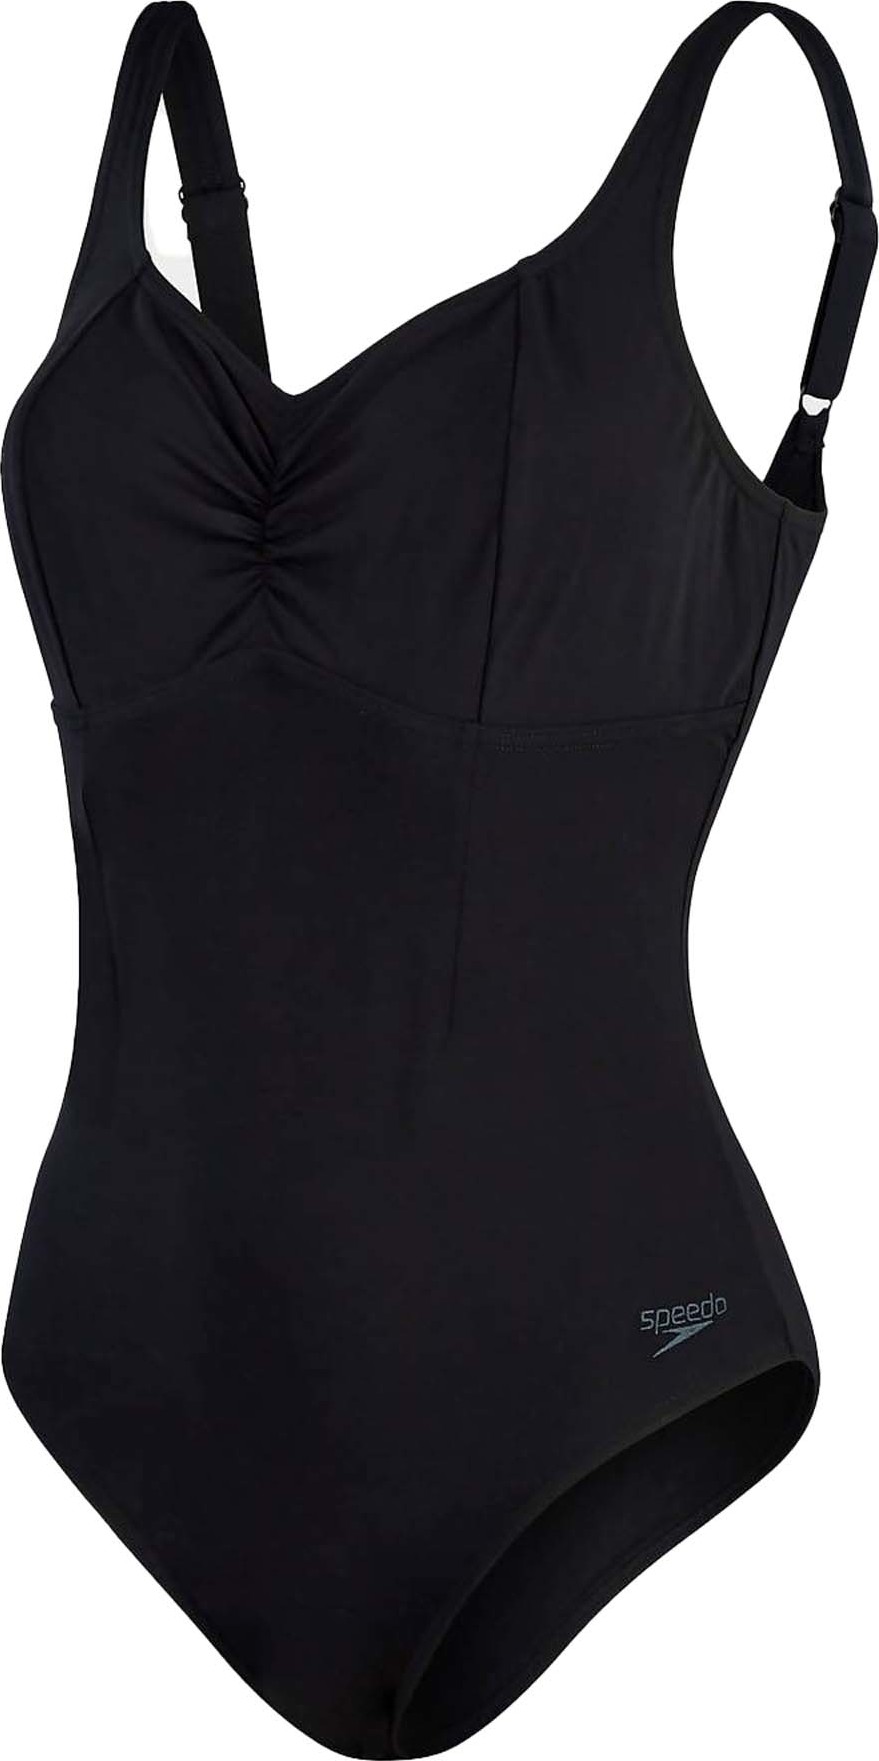 Speedo Women’s Shaping Aquanite Swimsuit Black